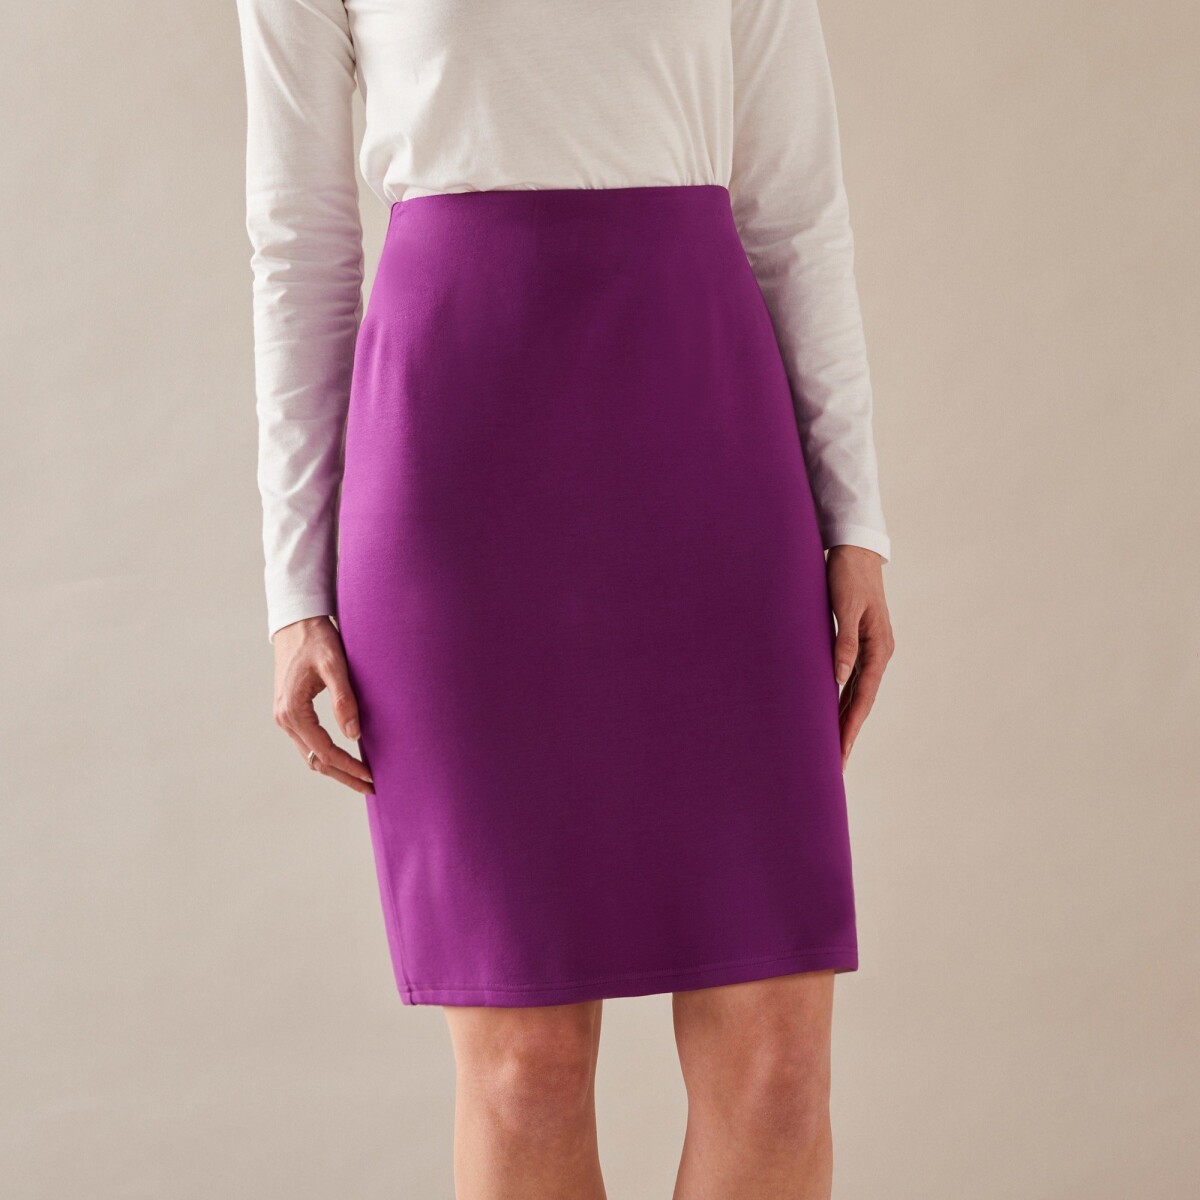 Jednofarebná úpletová sukňa slivková 34 36